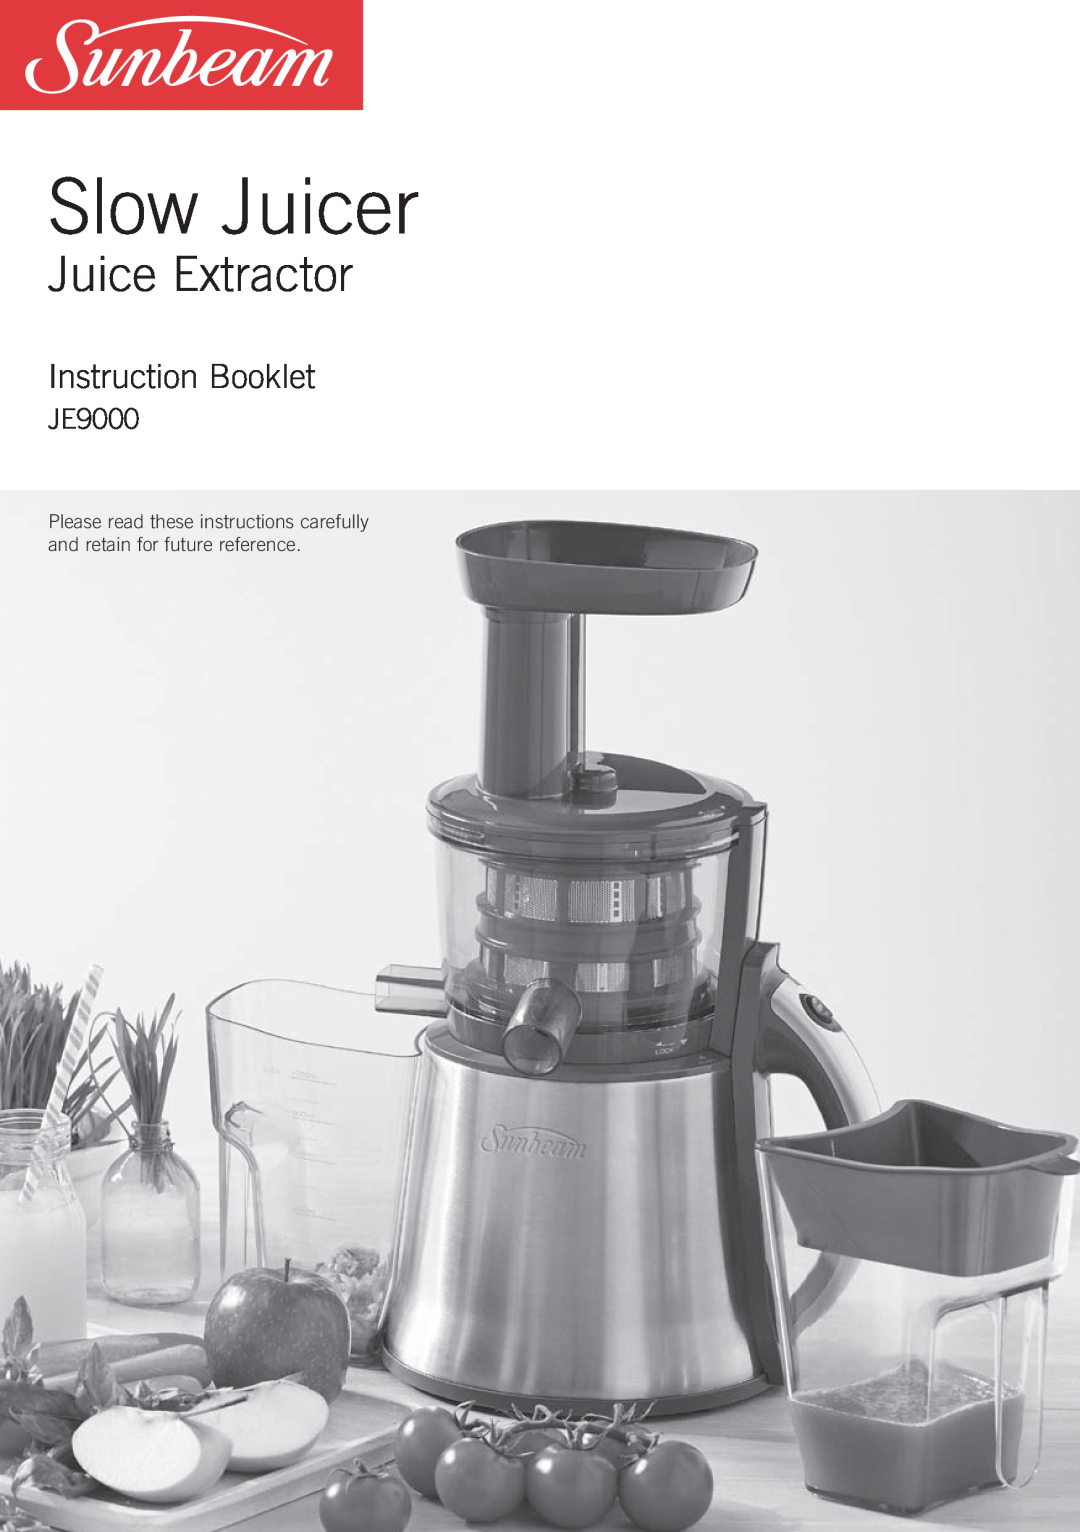 Sunbeam JE9000 manual Slow Juicer, Juice Extractor, Instruction Booklet 